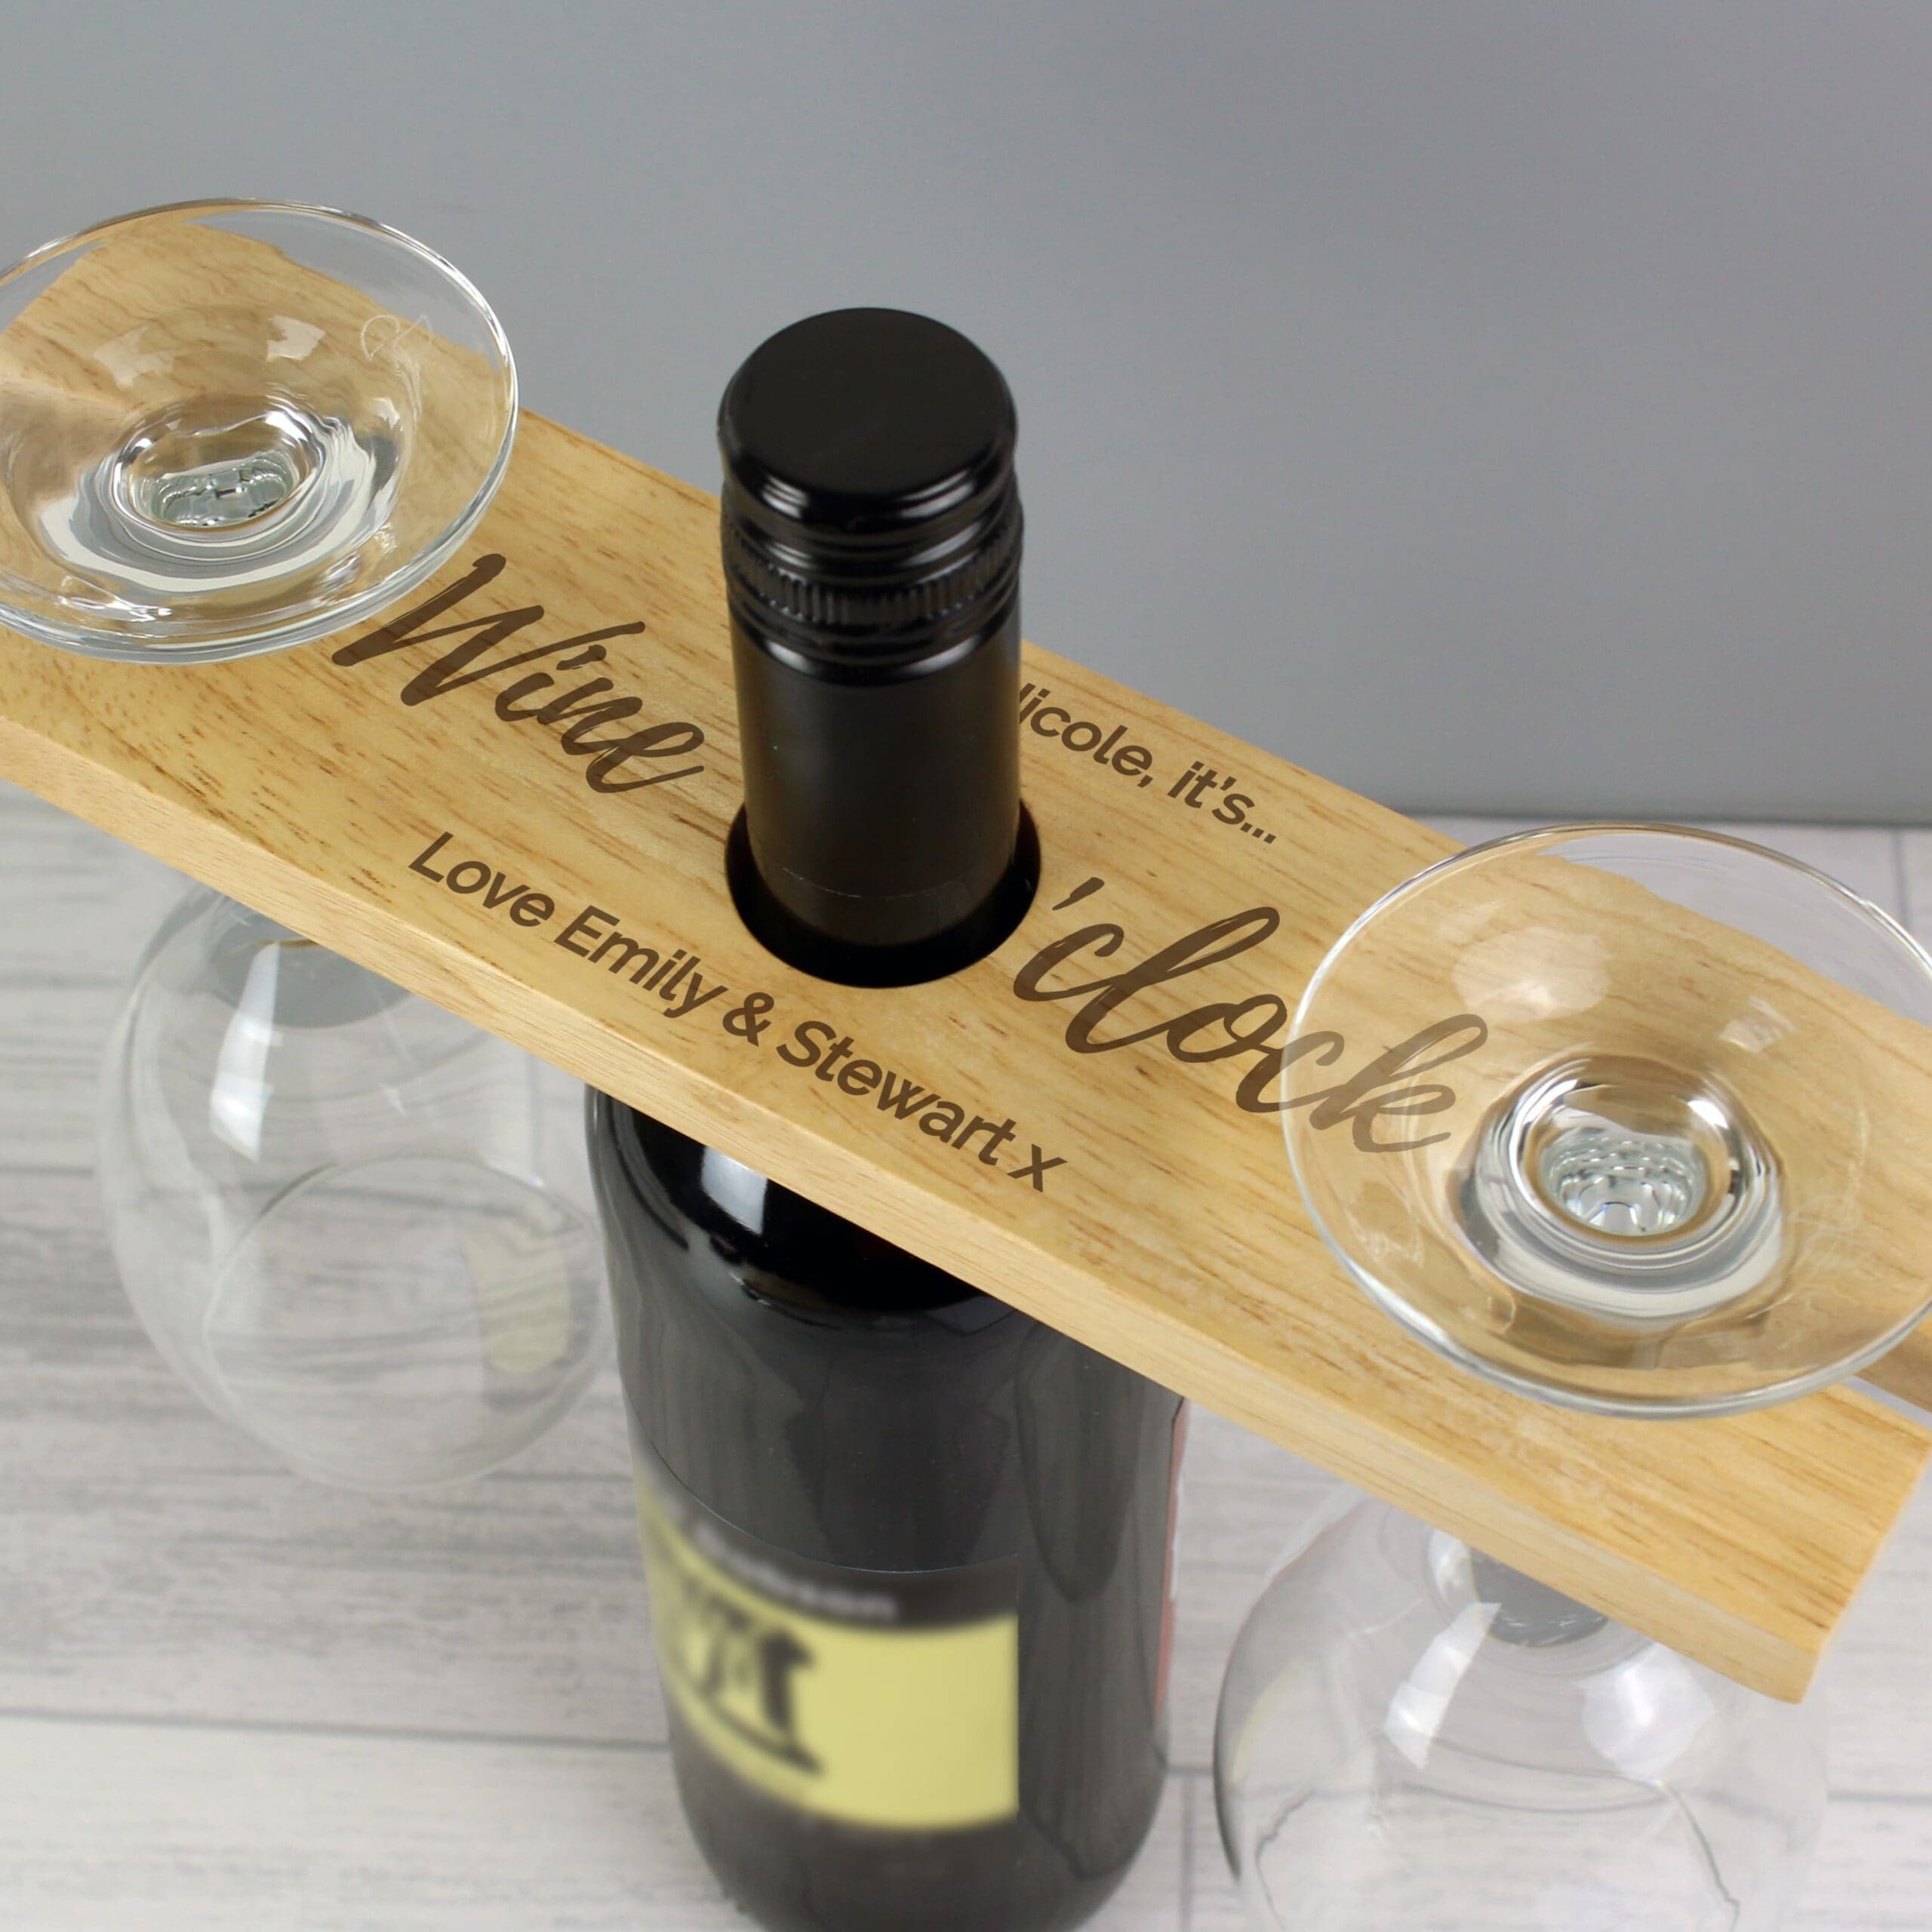 Personalised 'Wine O'clock' Wine Glass & Bottle Holder